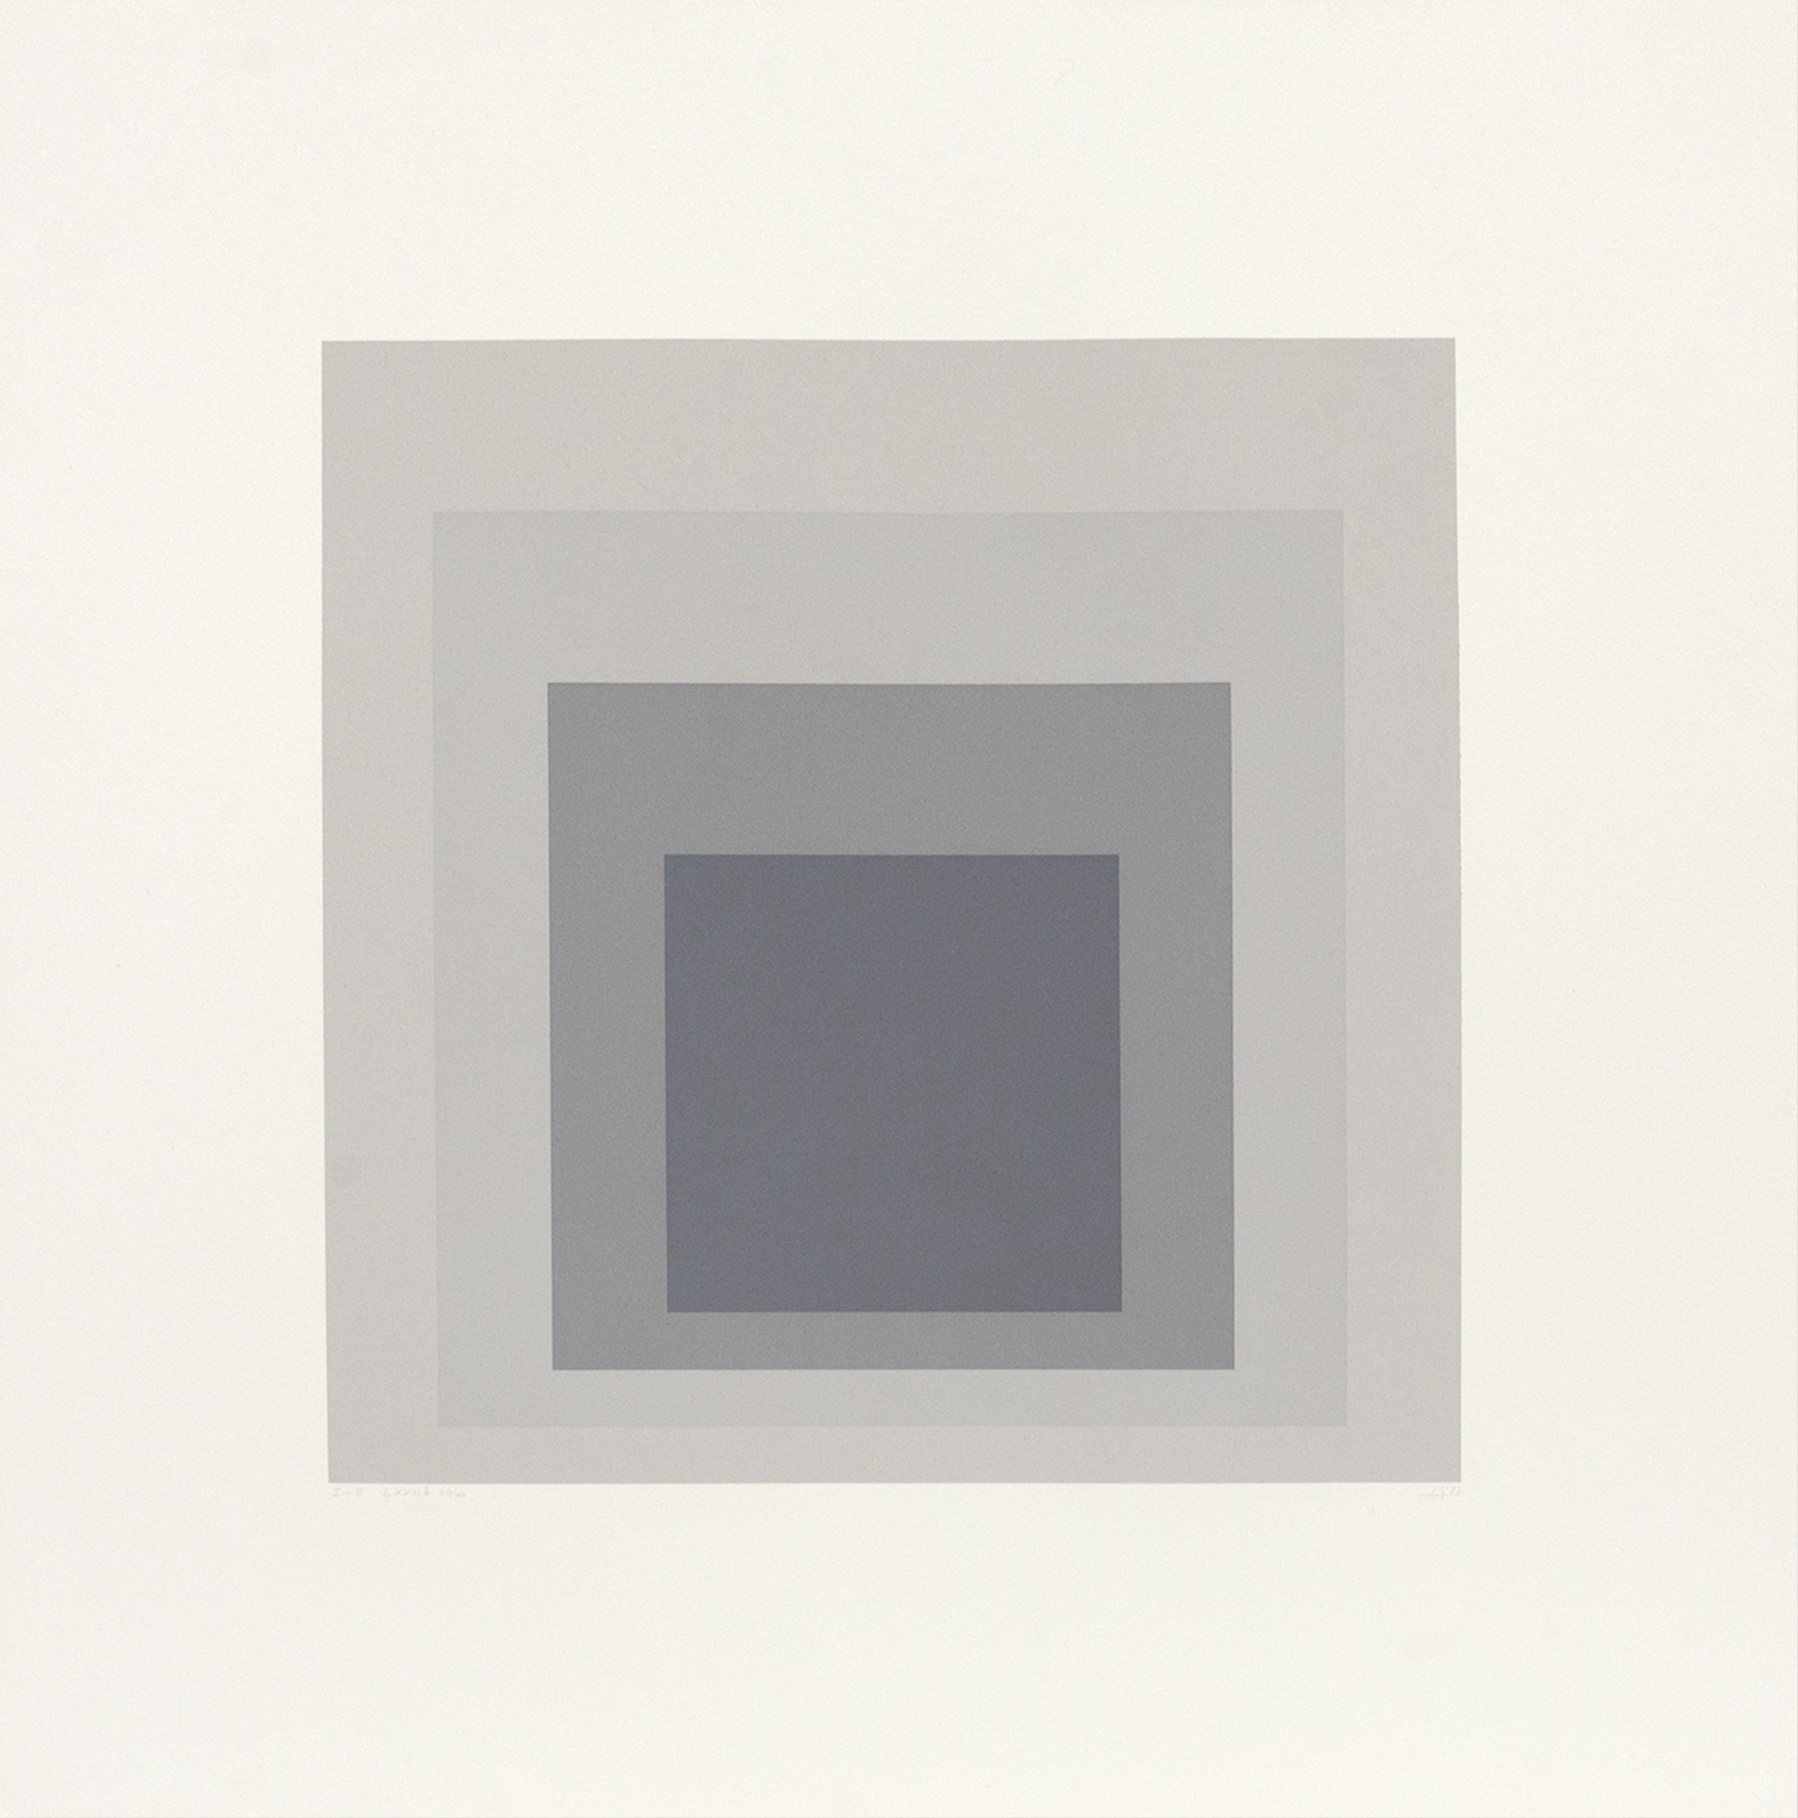 Josef Albers I-S LXXII b, 1972 Screenprint 28 x 28 inches (71.1 x 71.1 cm) Edition of 100